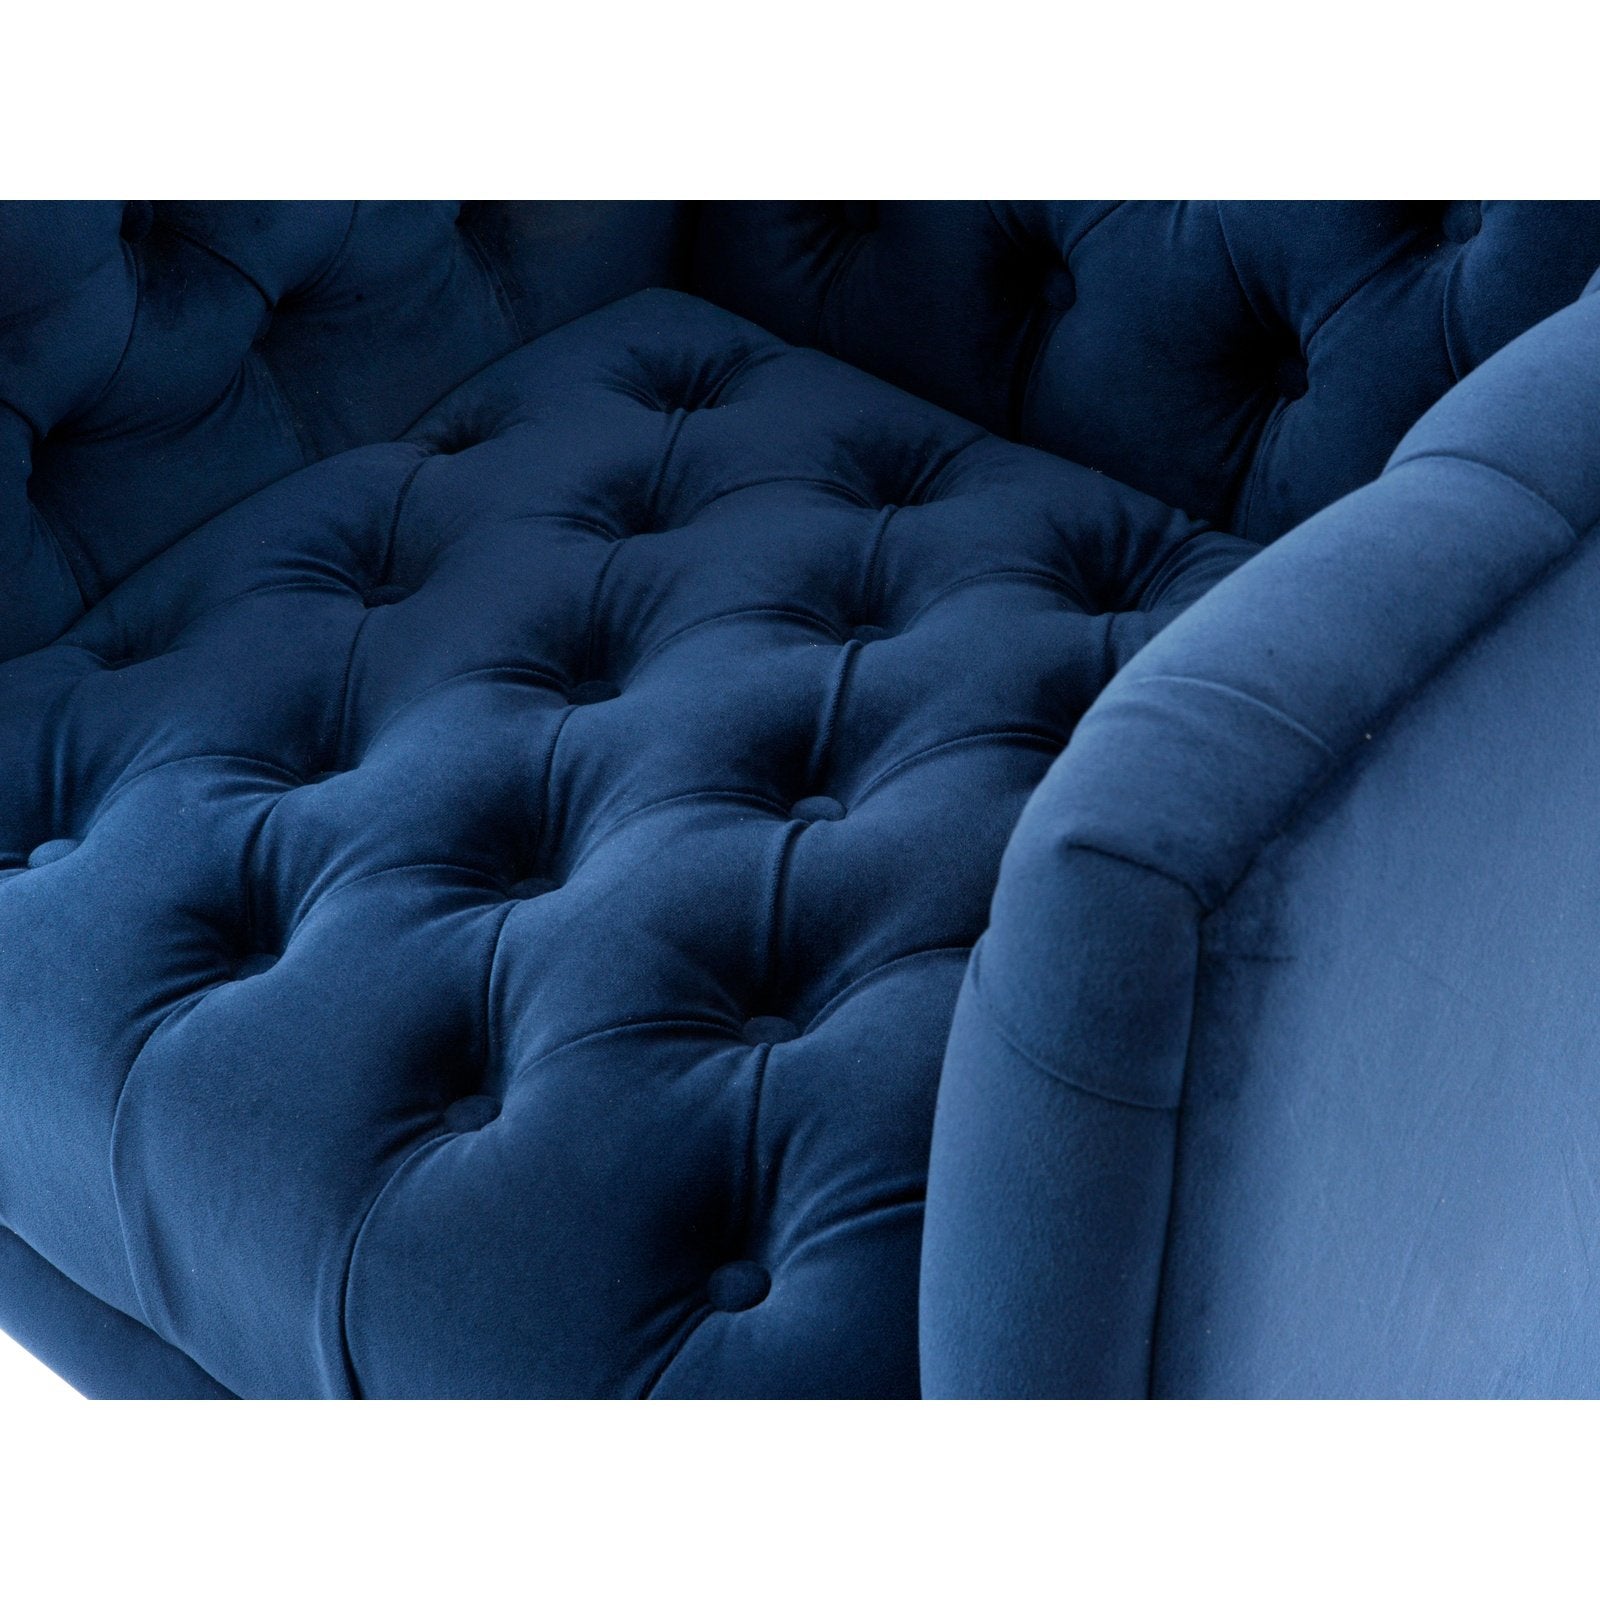 Ayla Blue Velvet Button Detail Occasional Chair